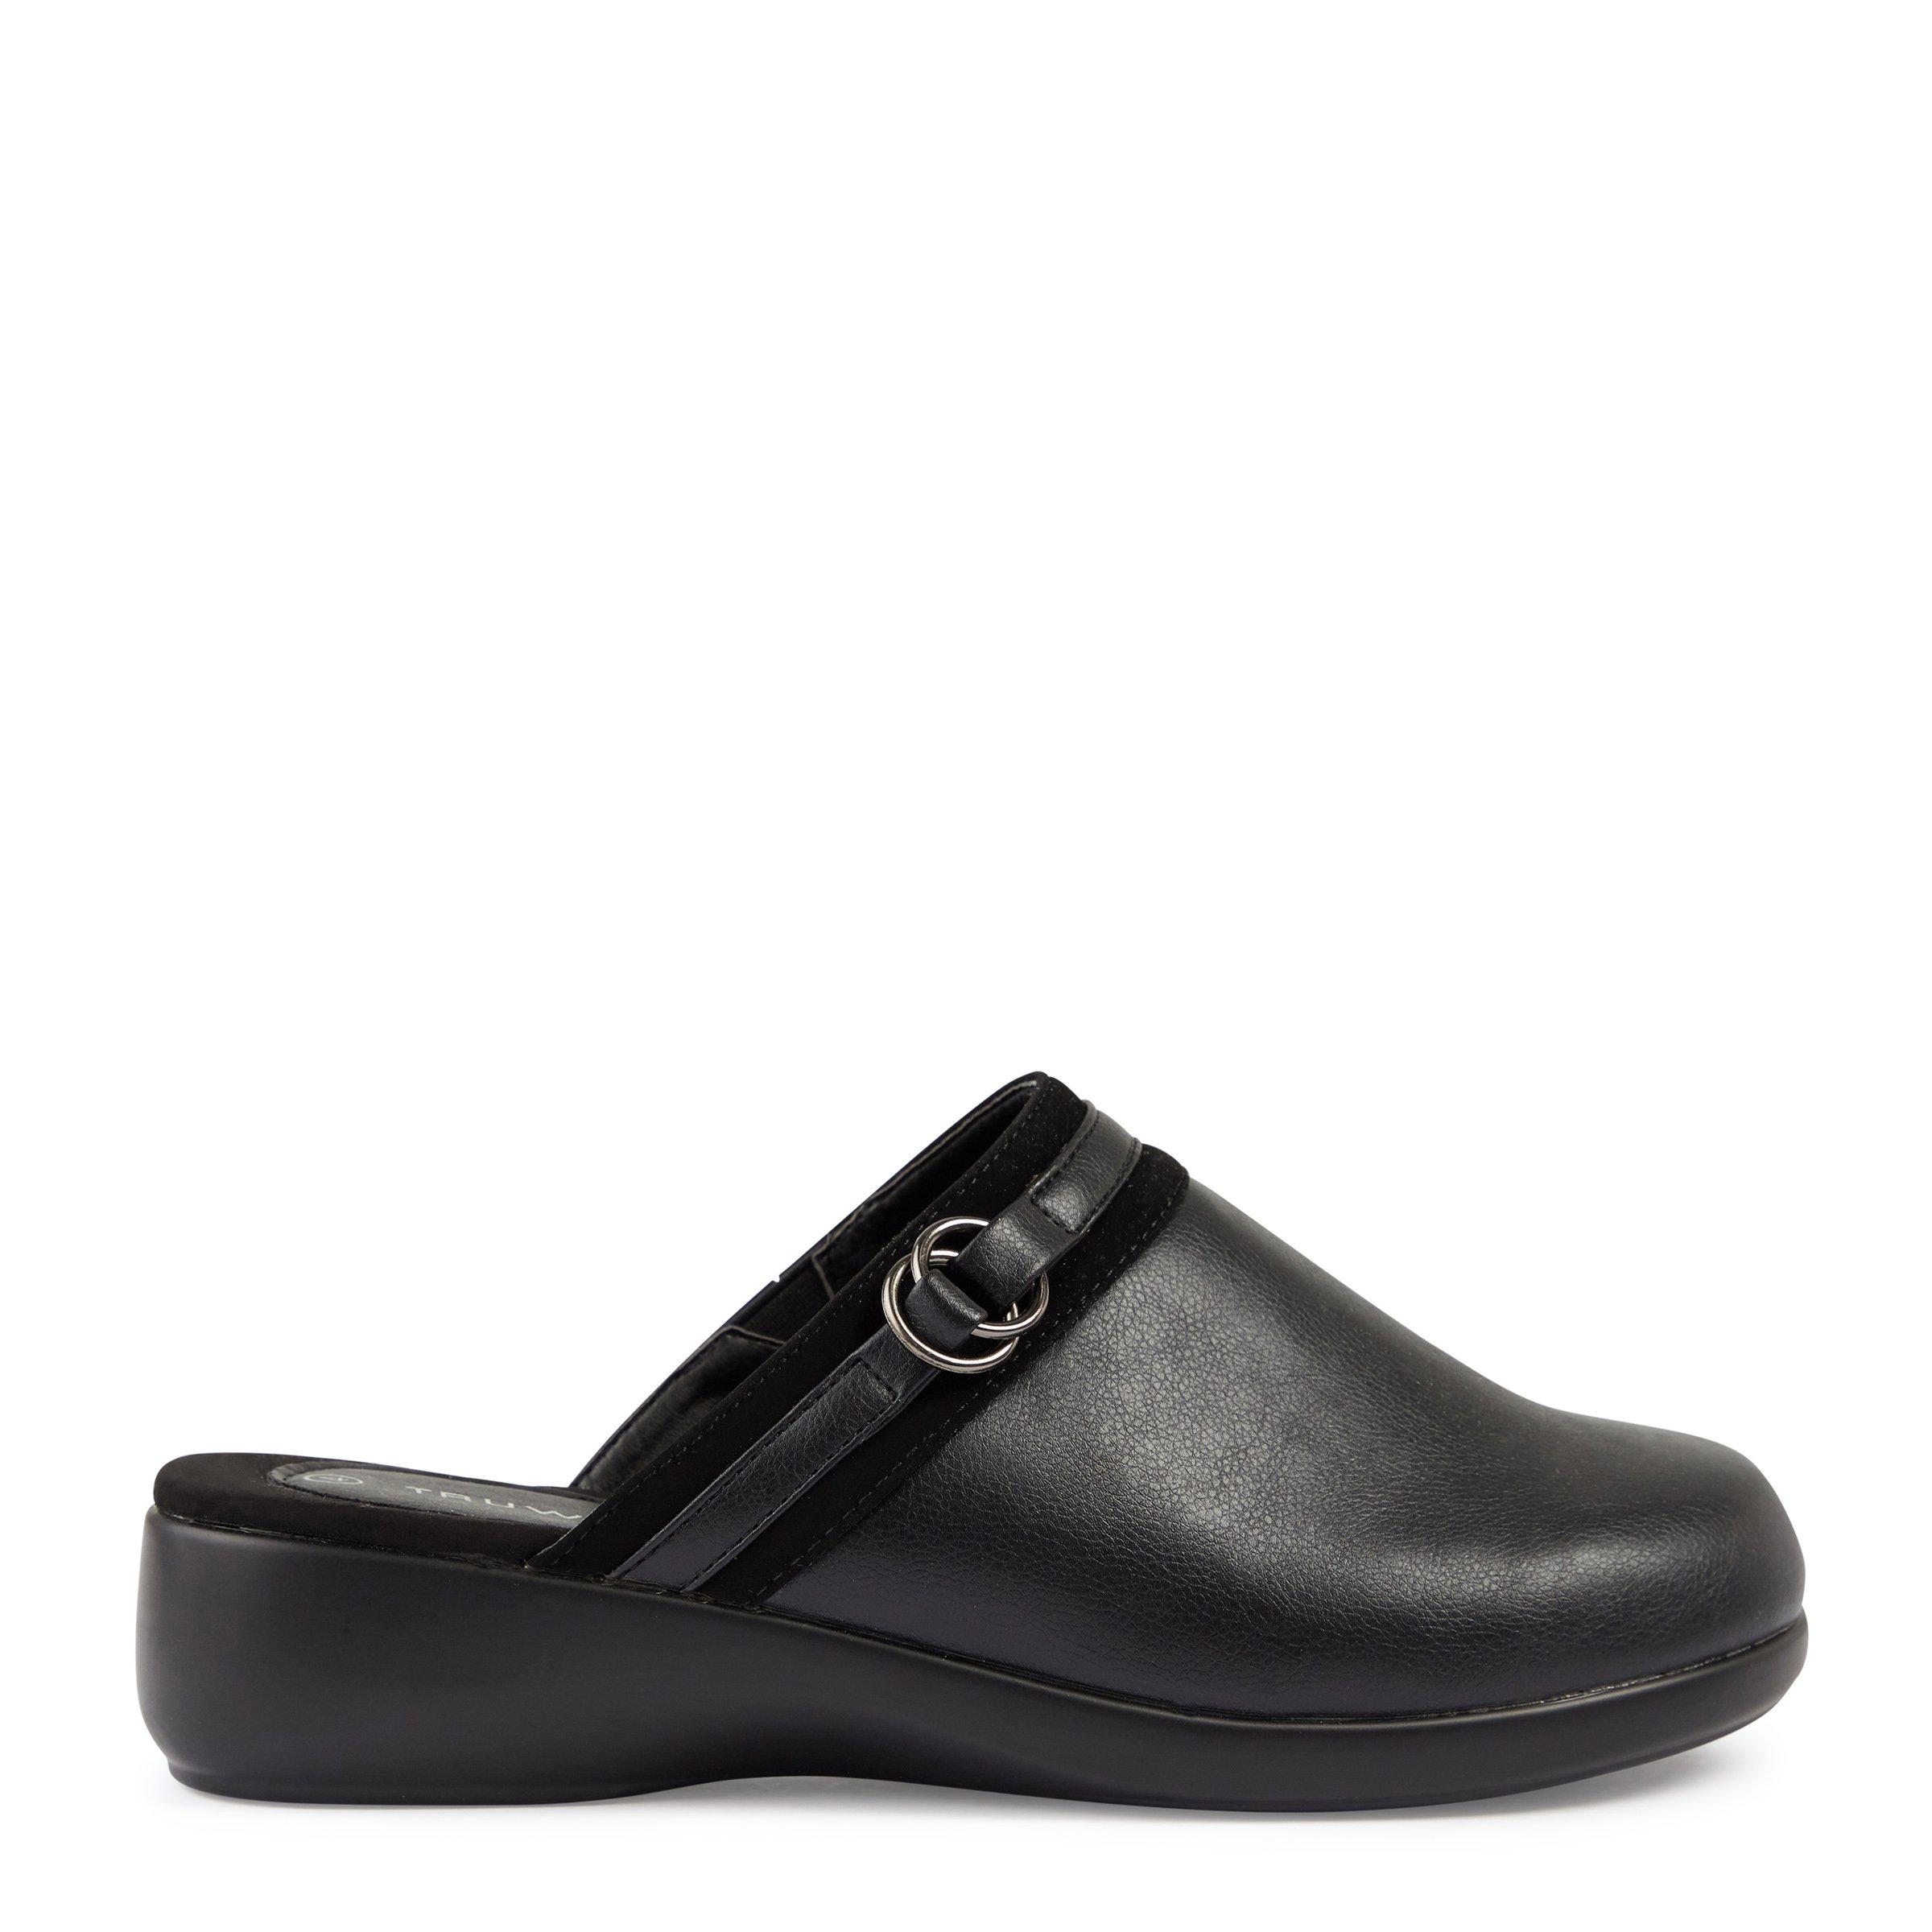 Buy Truworths Black Clog Shoe Online | Truworths